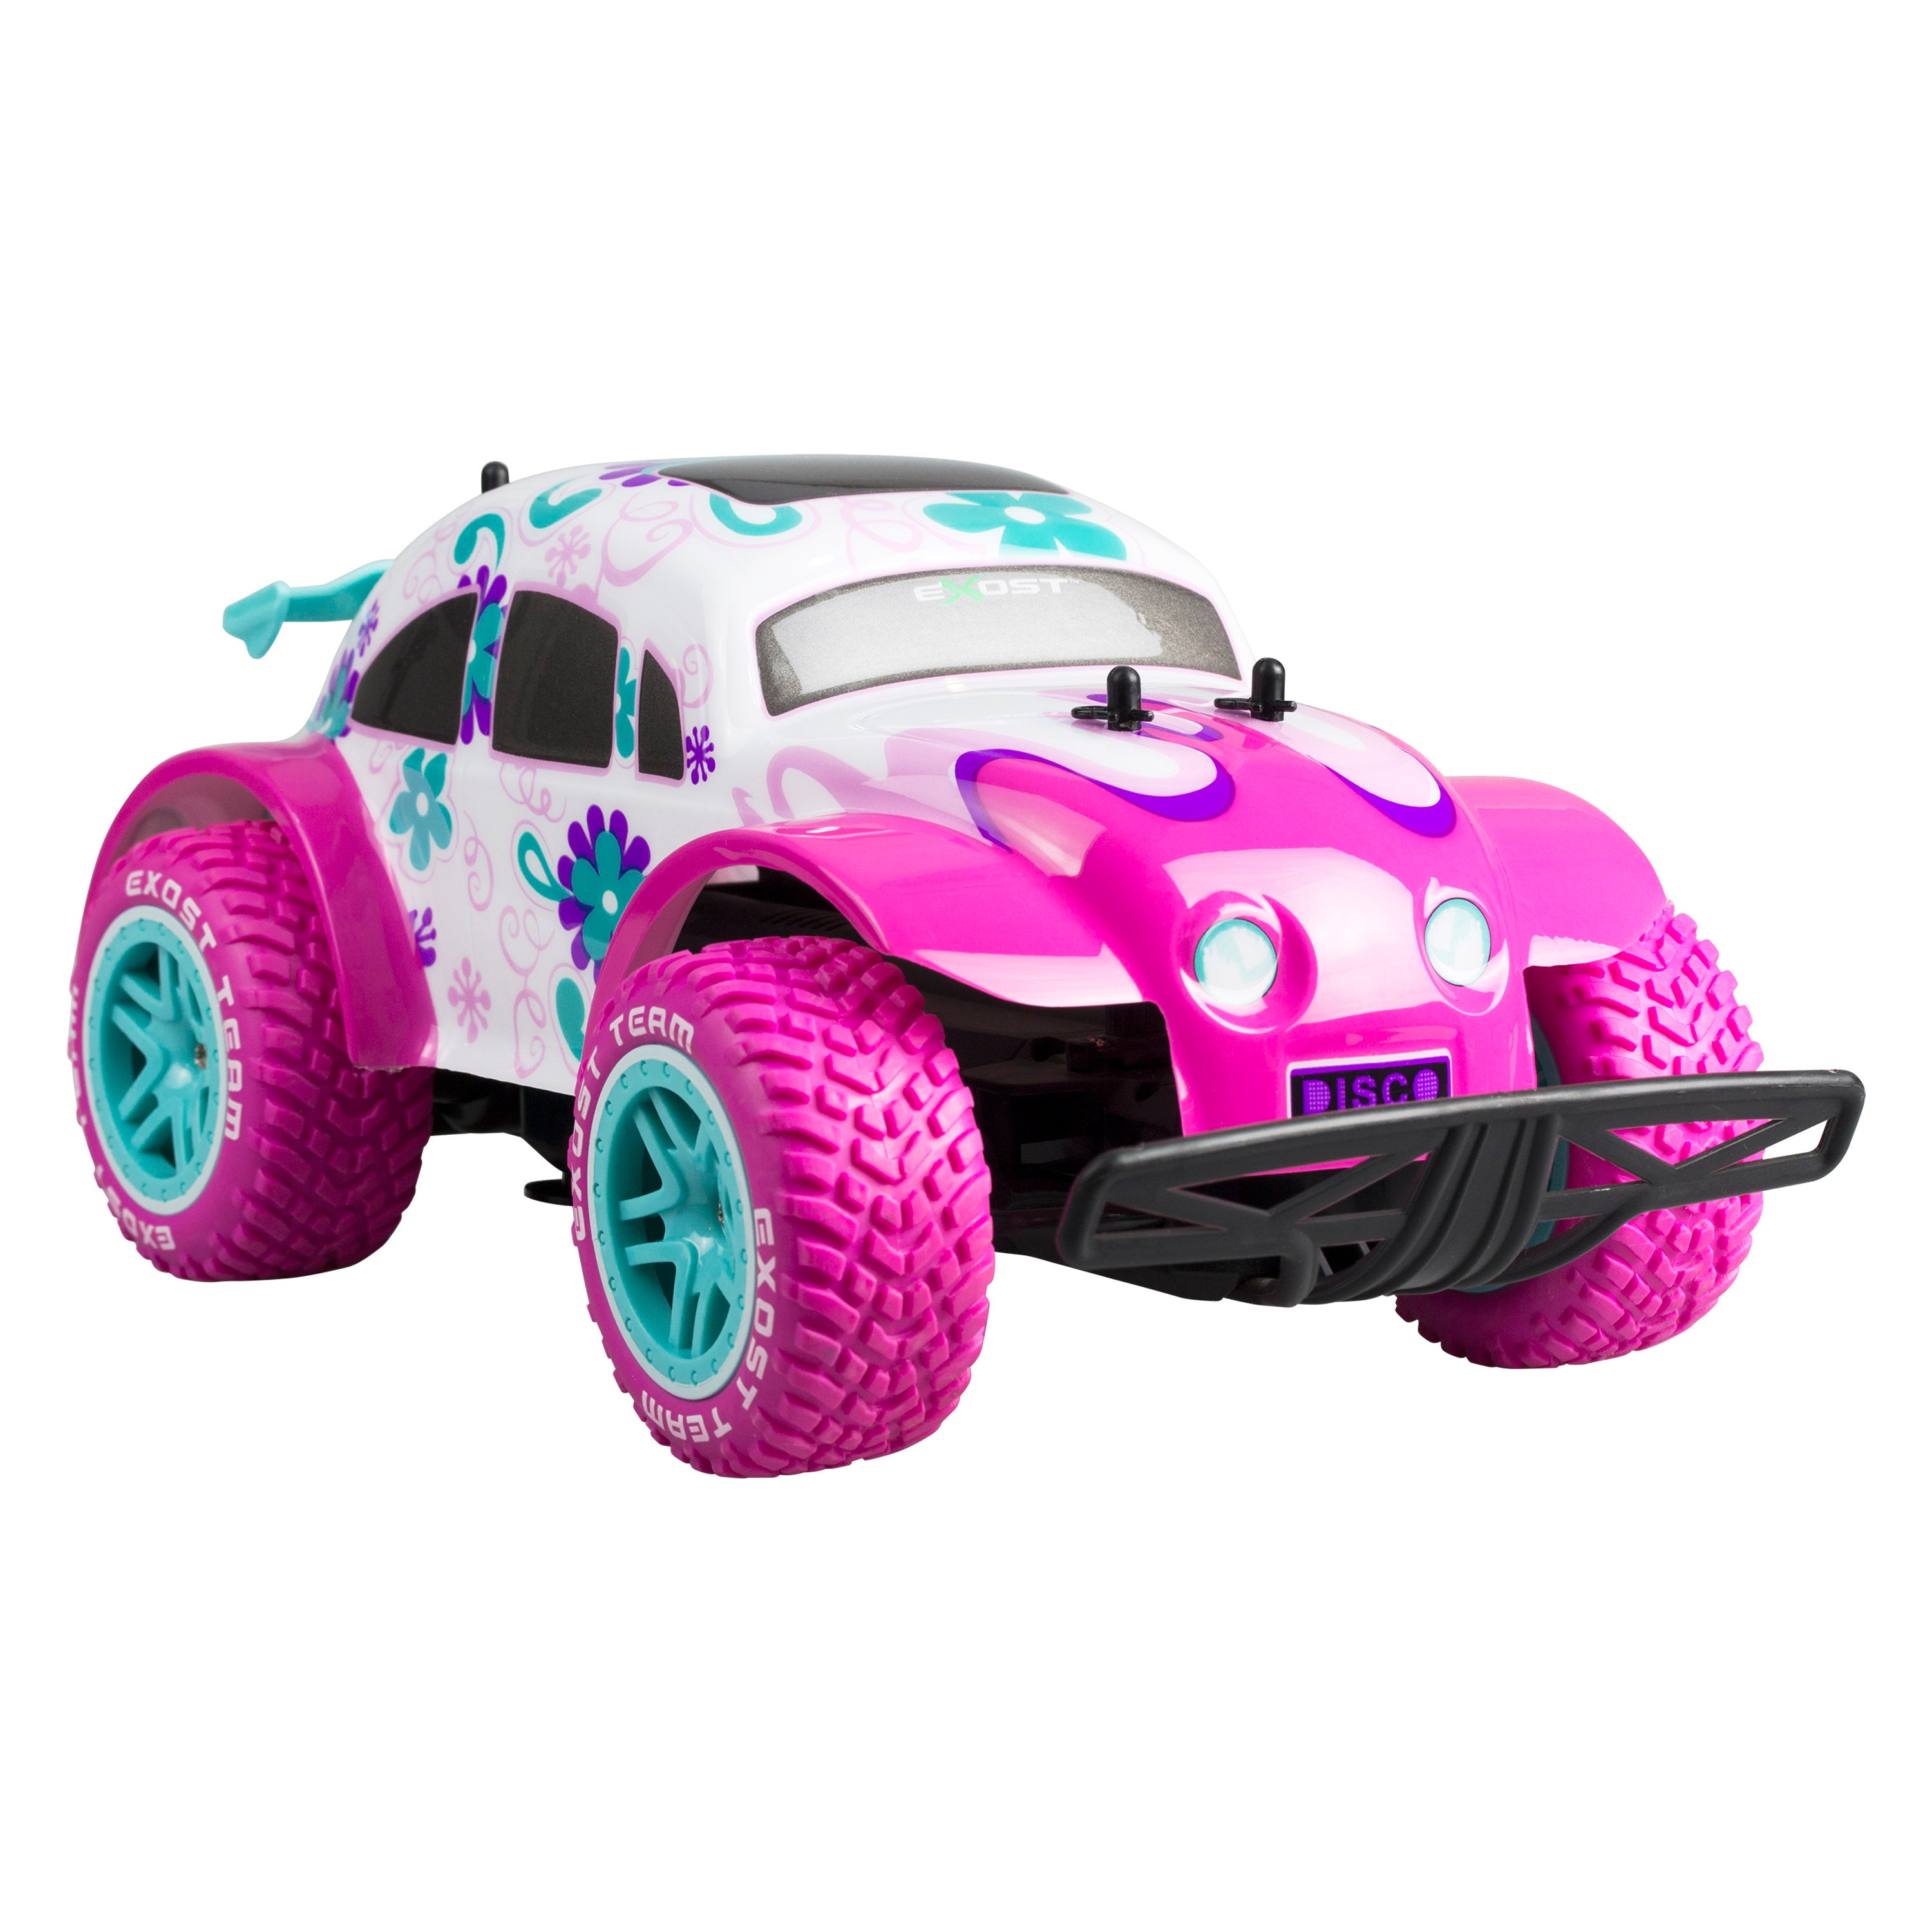 Silverlit exost 360 cross e car pink Brand New